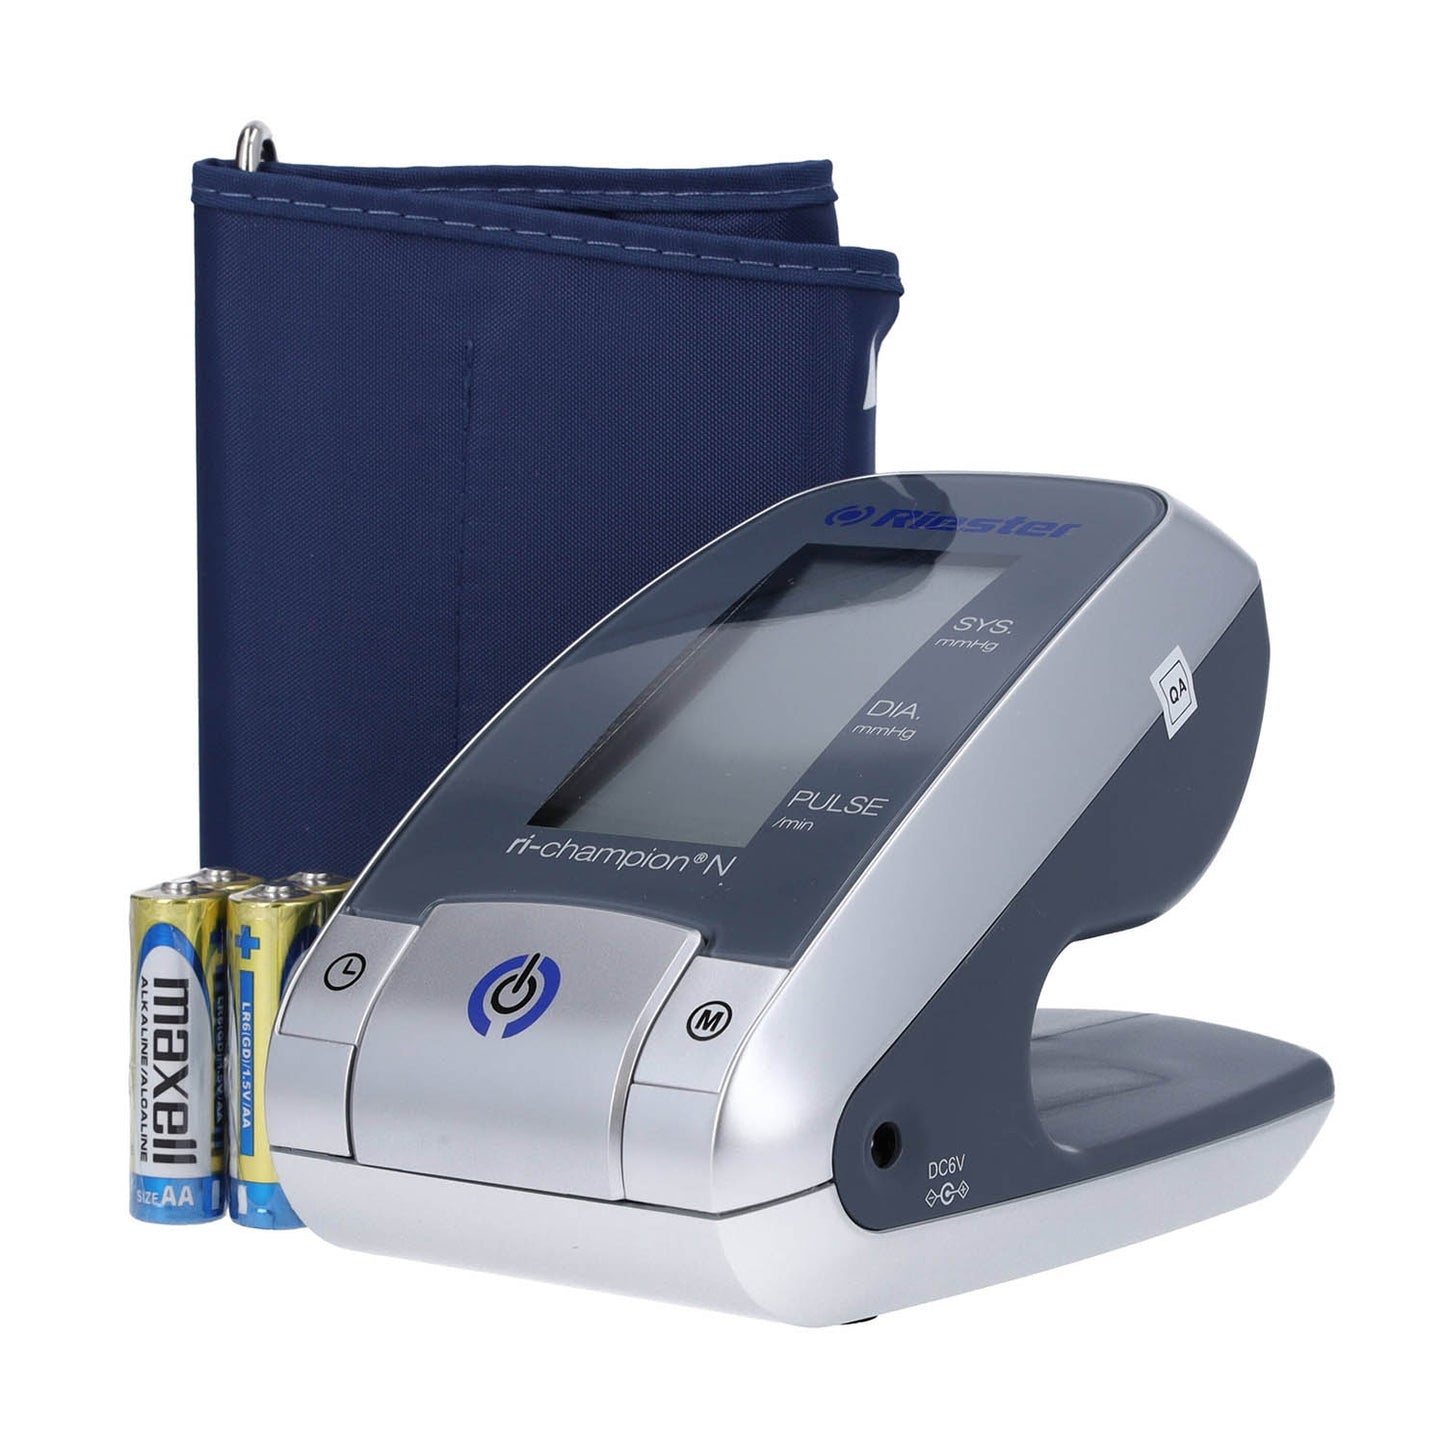 Riester ri-champion N Digital Blood Pressure Monitor with Adult Cuff